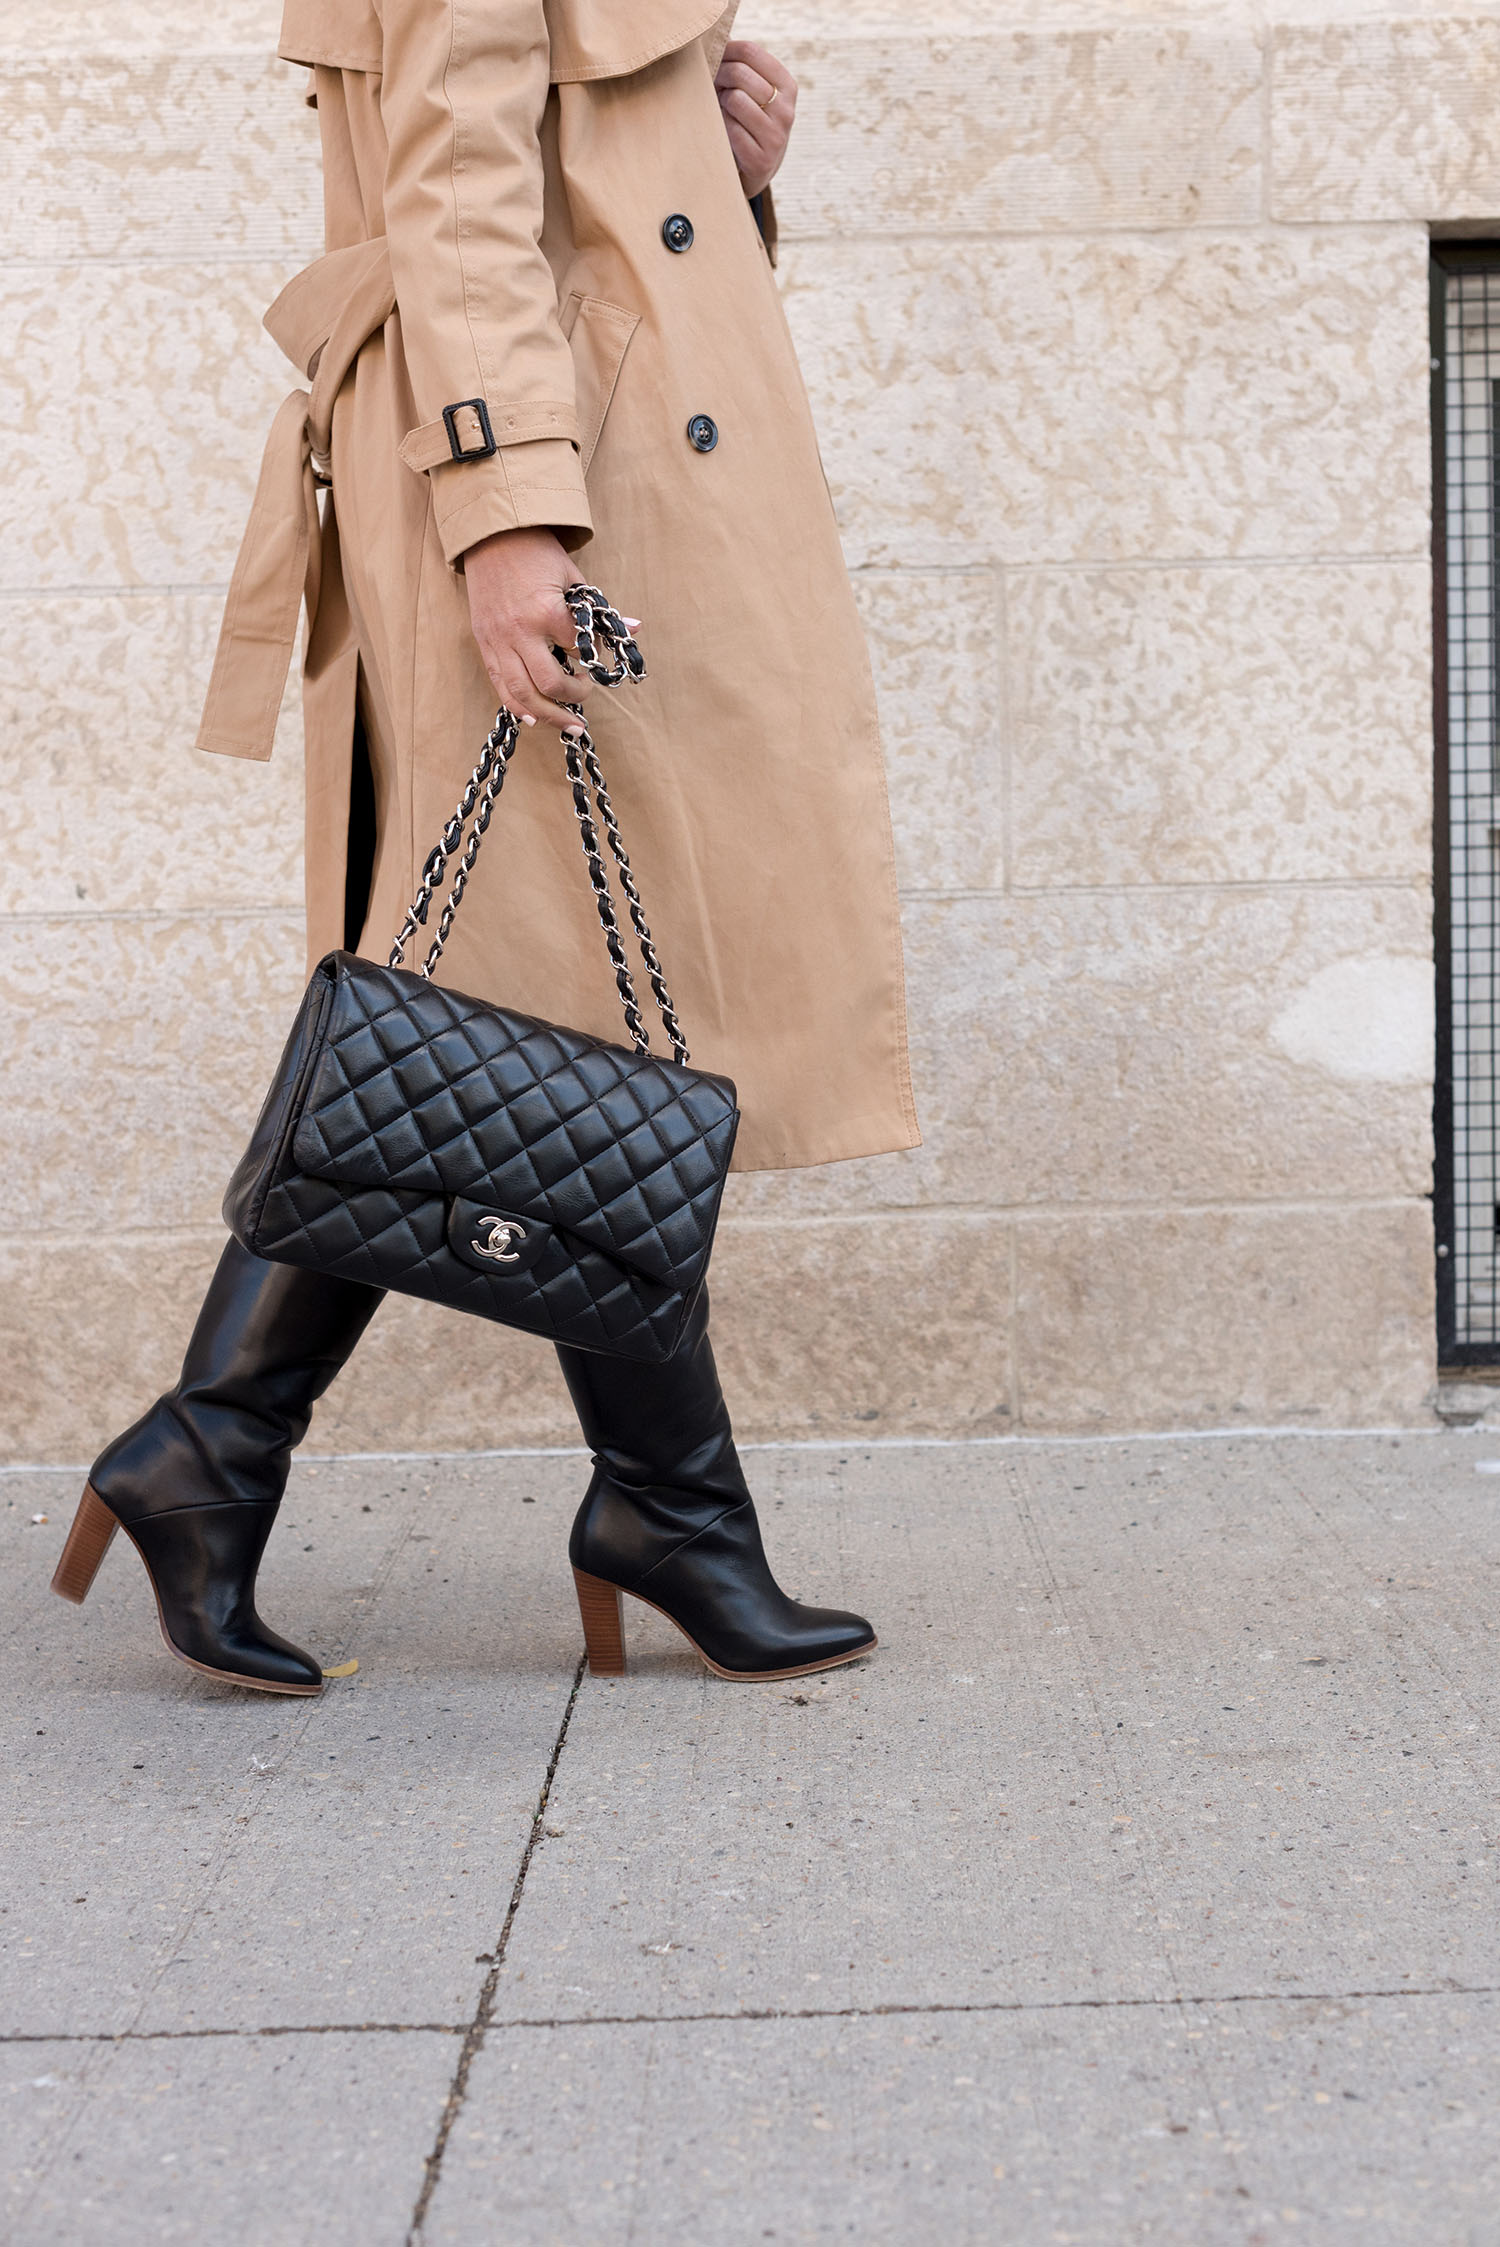 Coco & Vera - Chanel handbag, Mango trench, Sezane boots